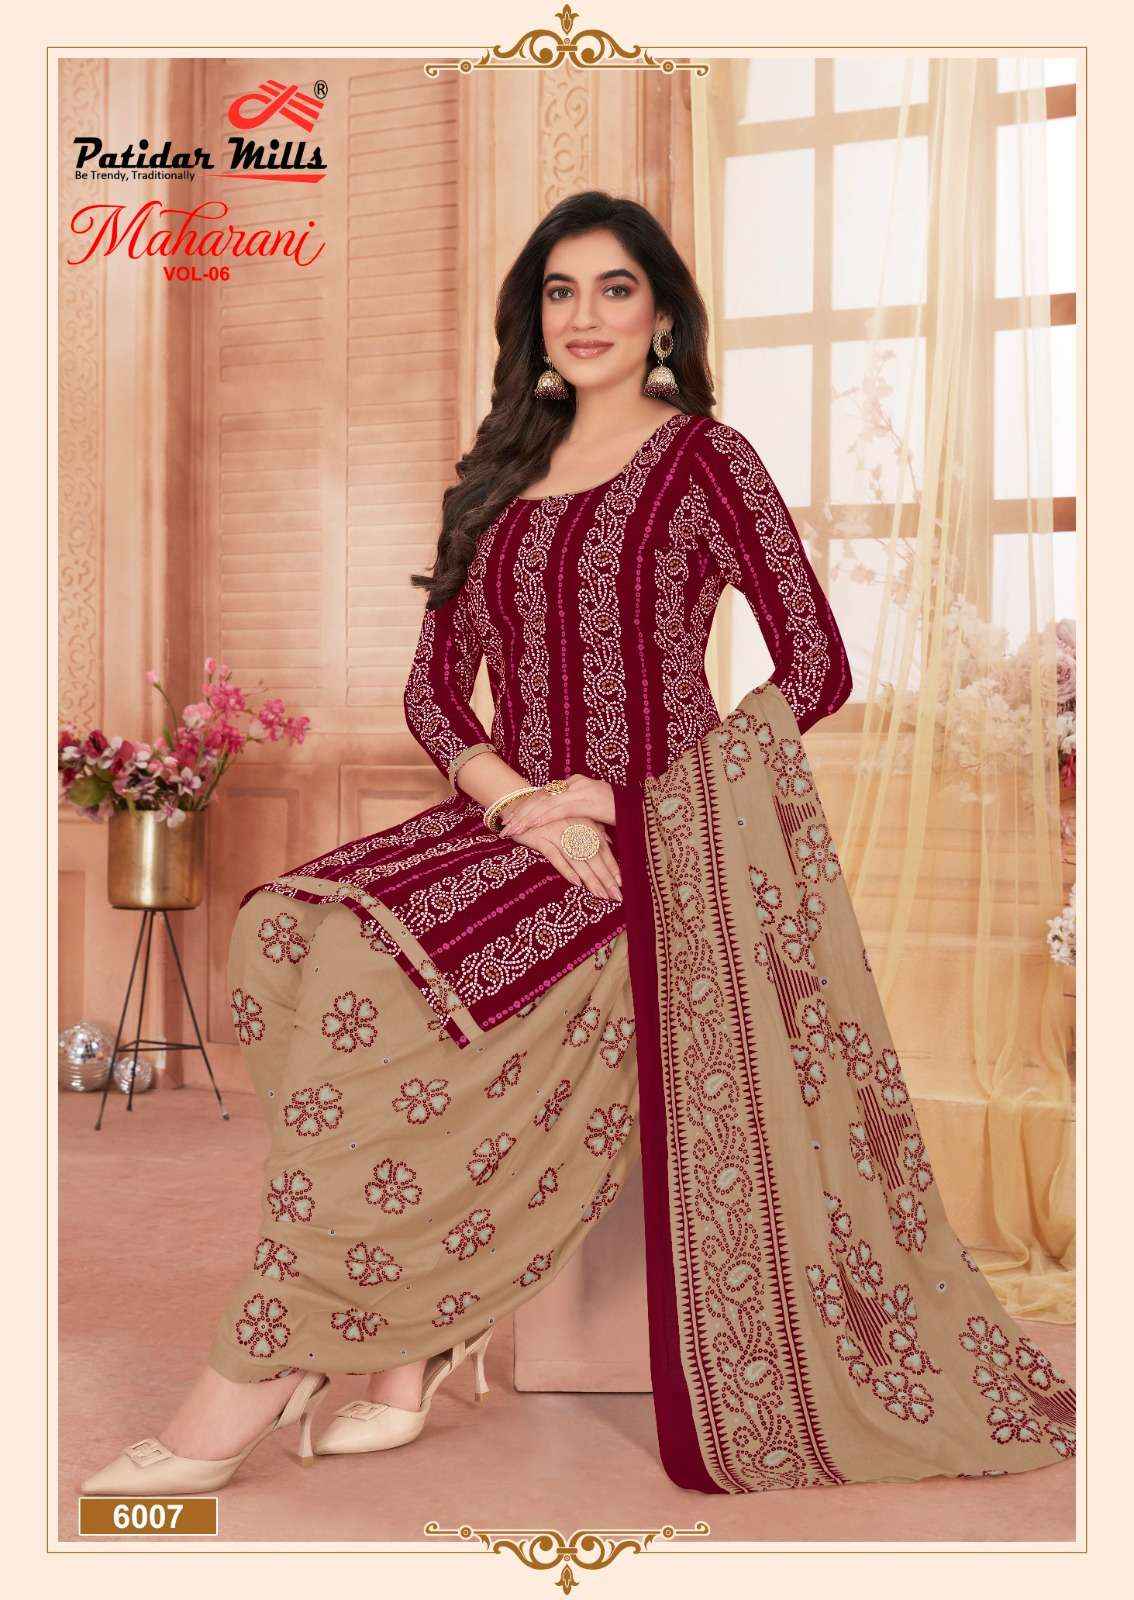 Patidar Mills Maharani Vol 6 Cotton Dress Material 10 pcs Catalogue